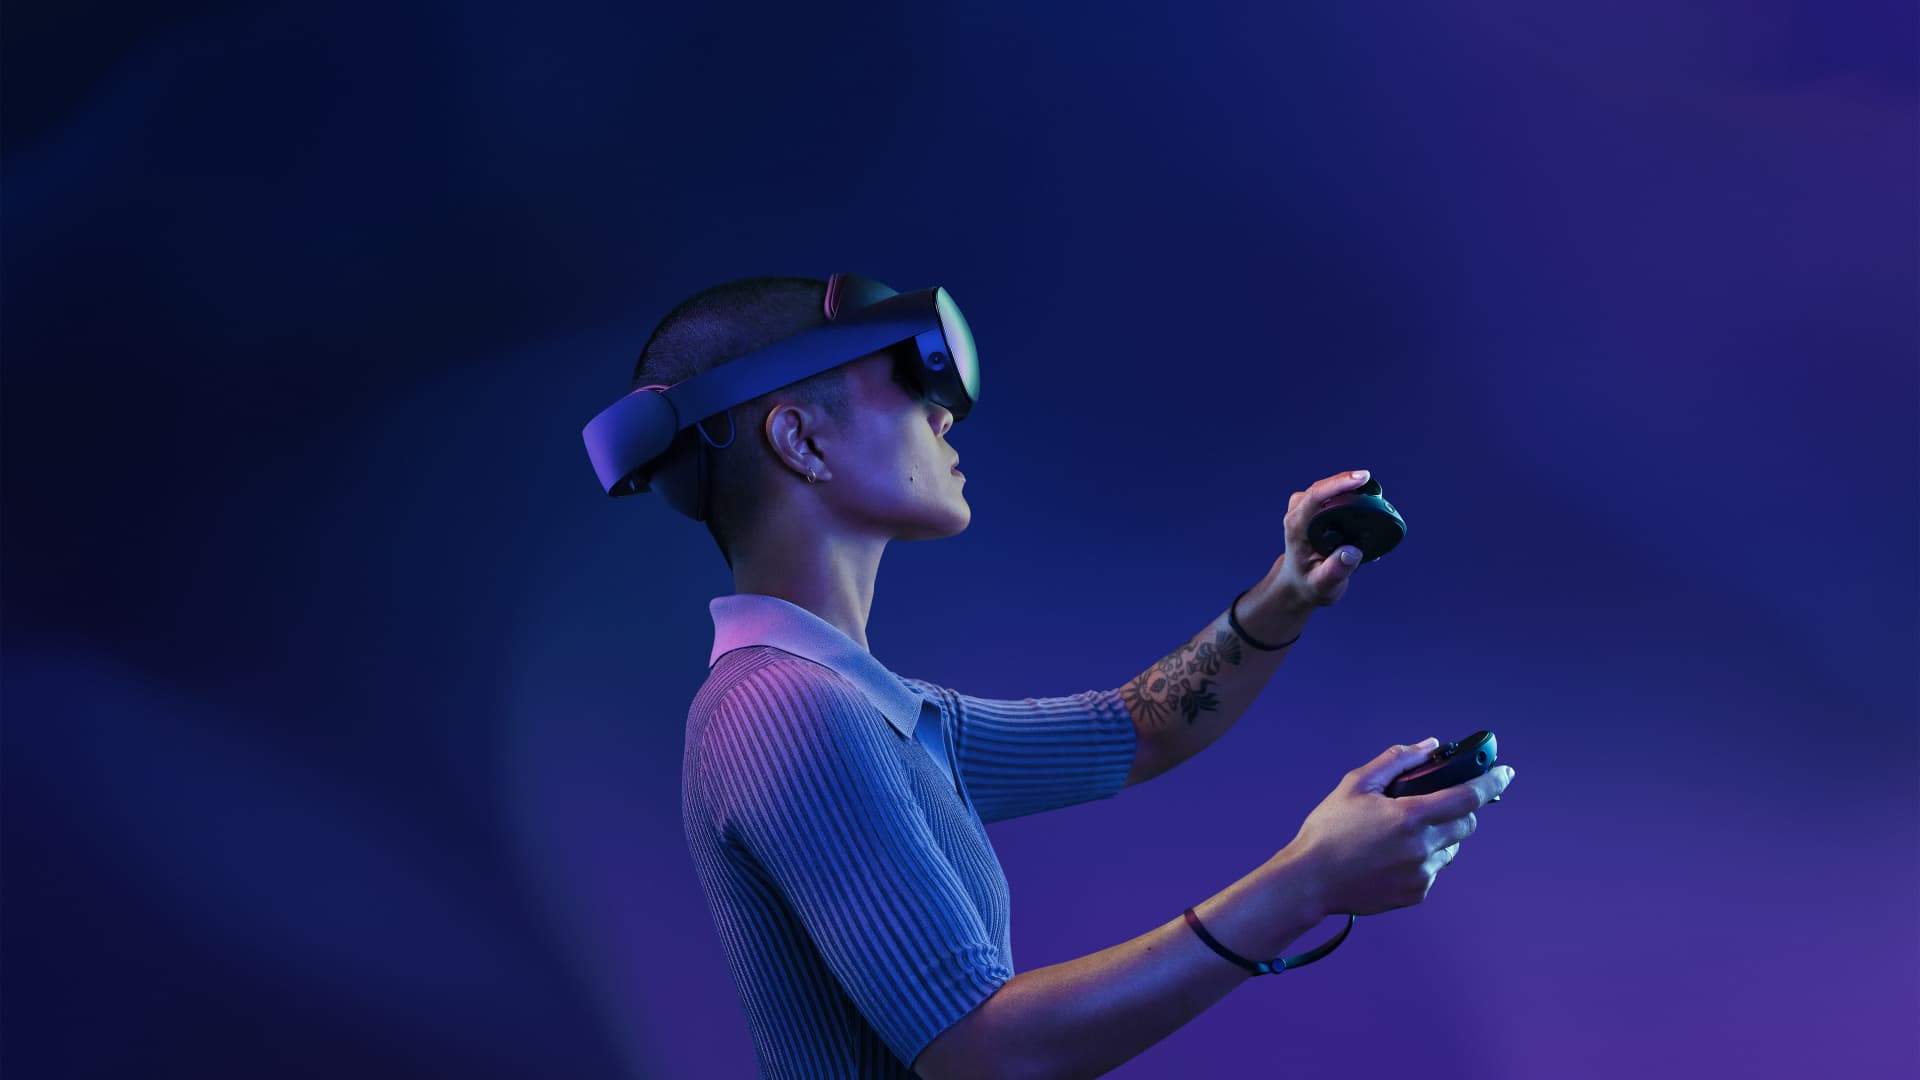 Meta CEO Mark Zuckerberg debuts Meta Quest Pro VR headset that will cost $1,500